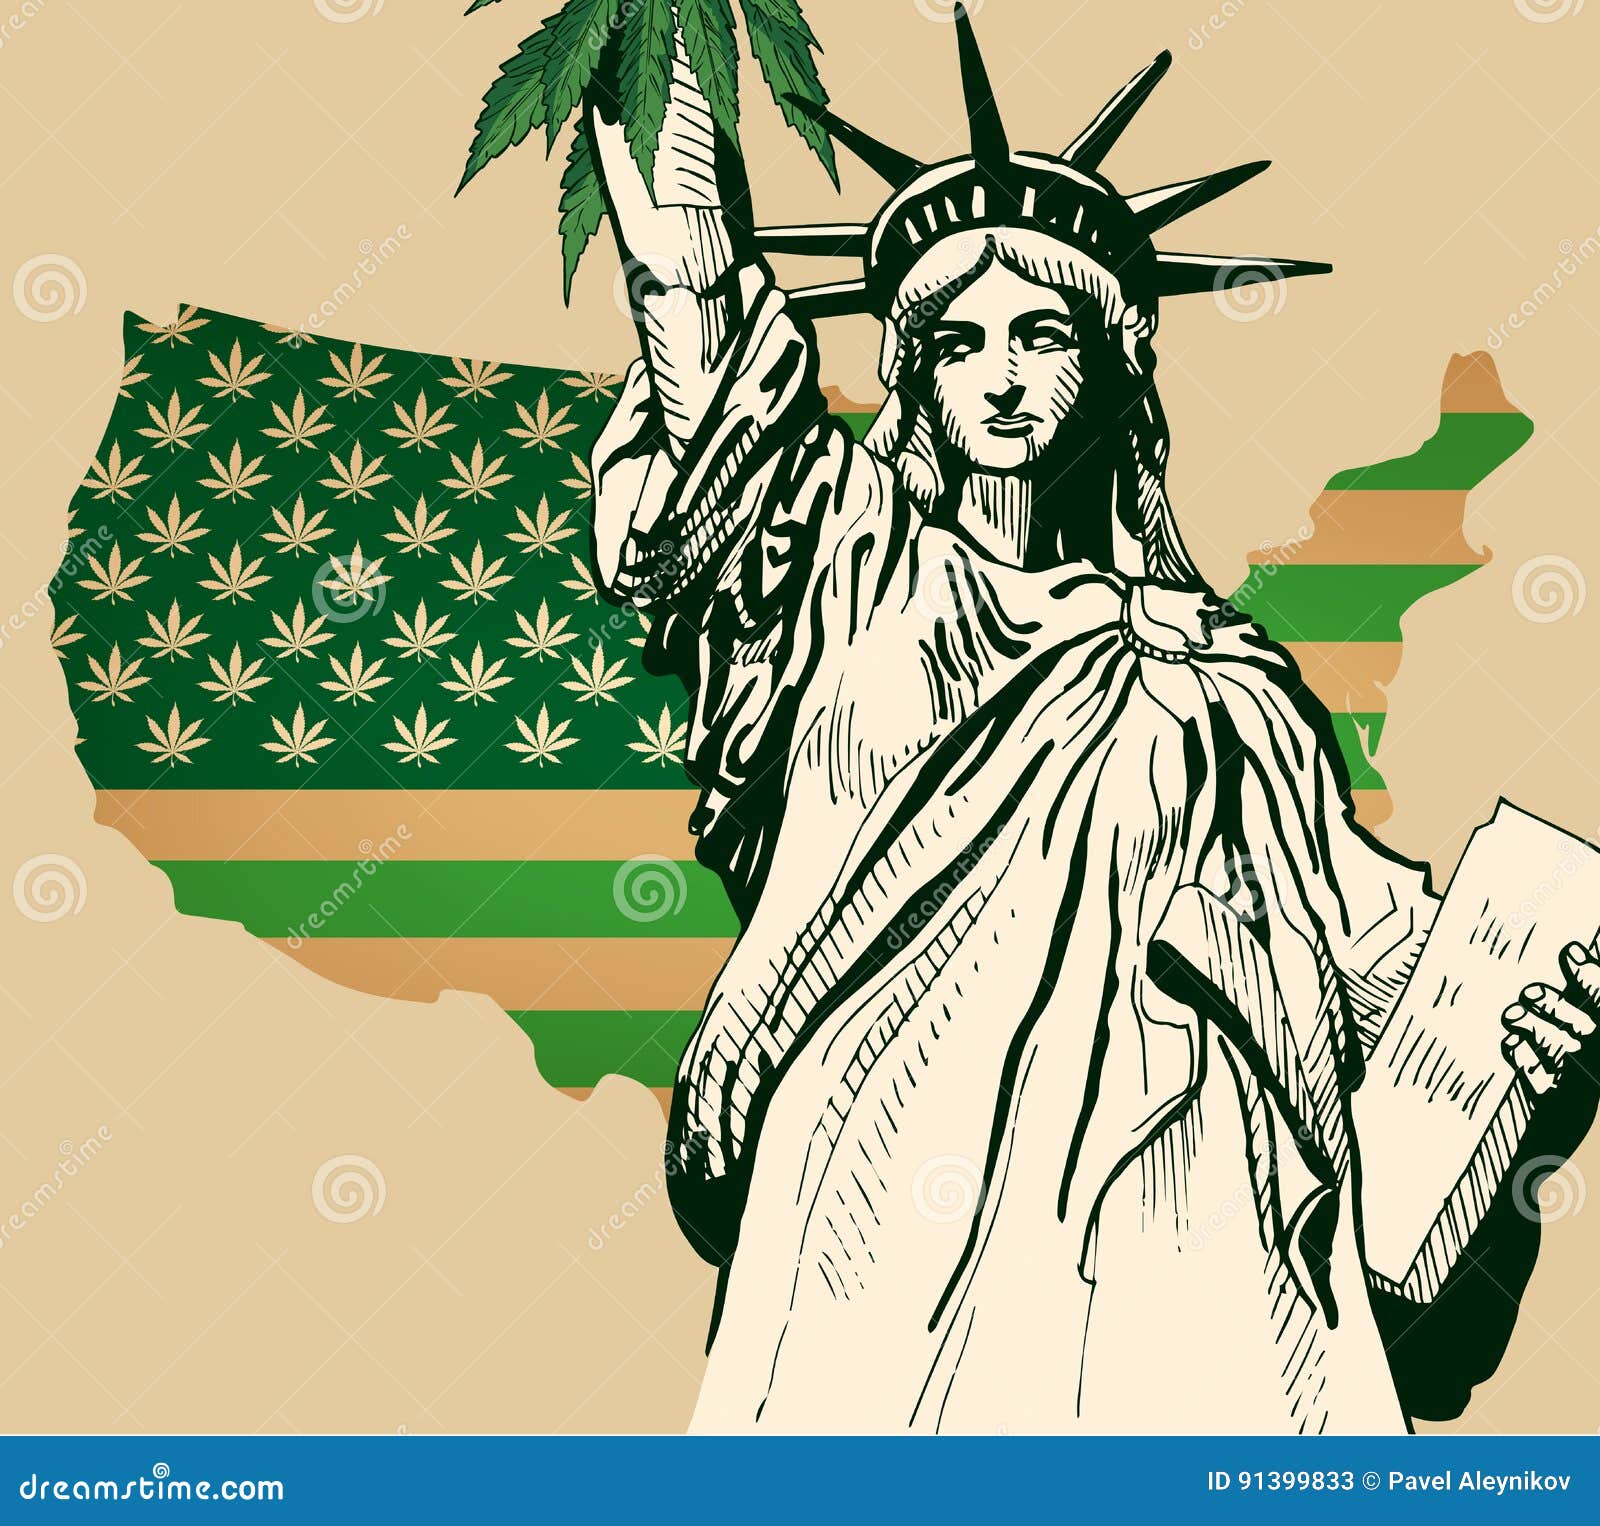 Genus Plant Pot Leaf Statue Of Liberty 5ft x 3ft 150cm x 90cm Flag Banner 